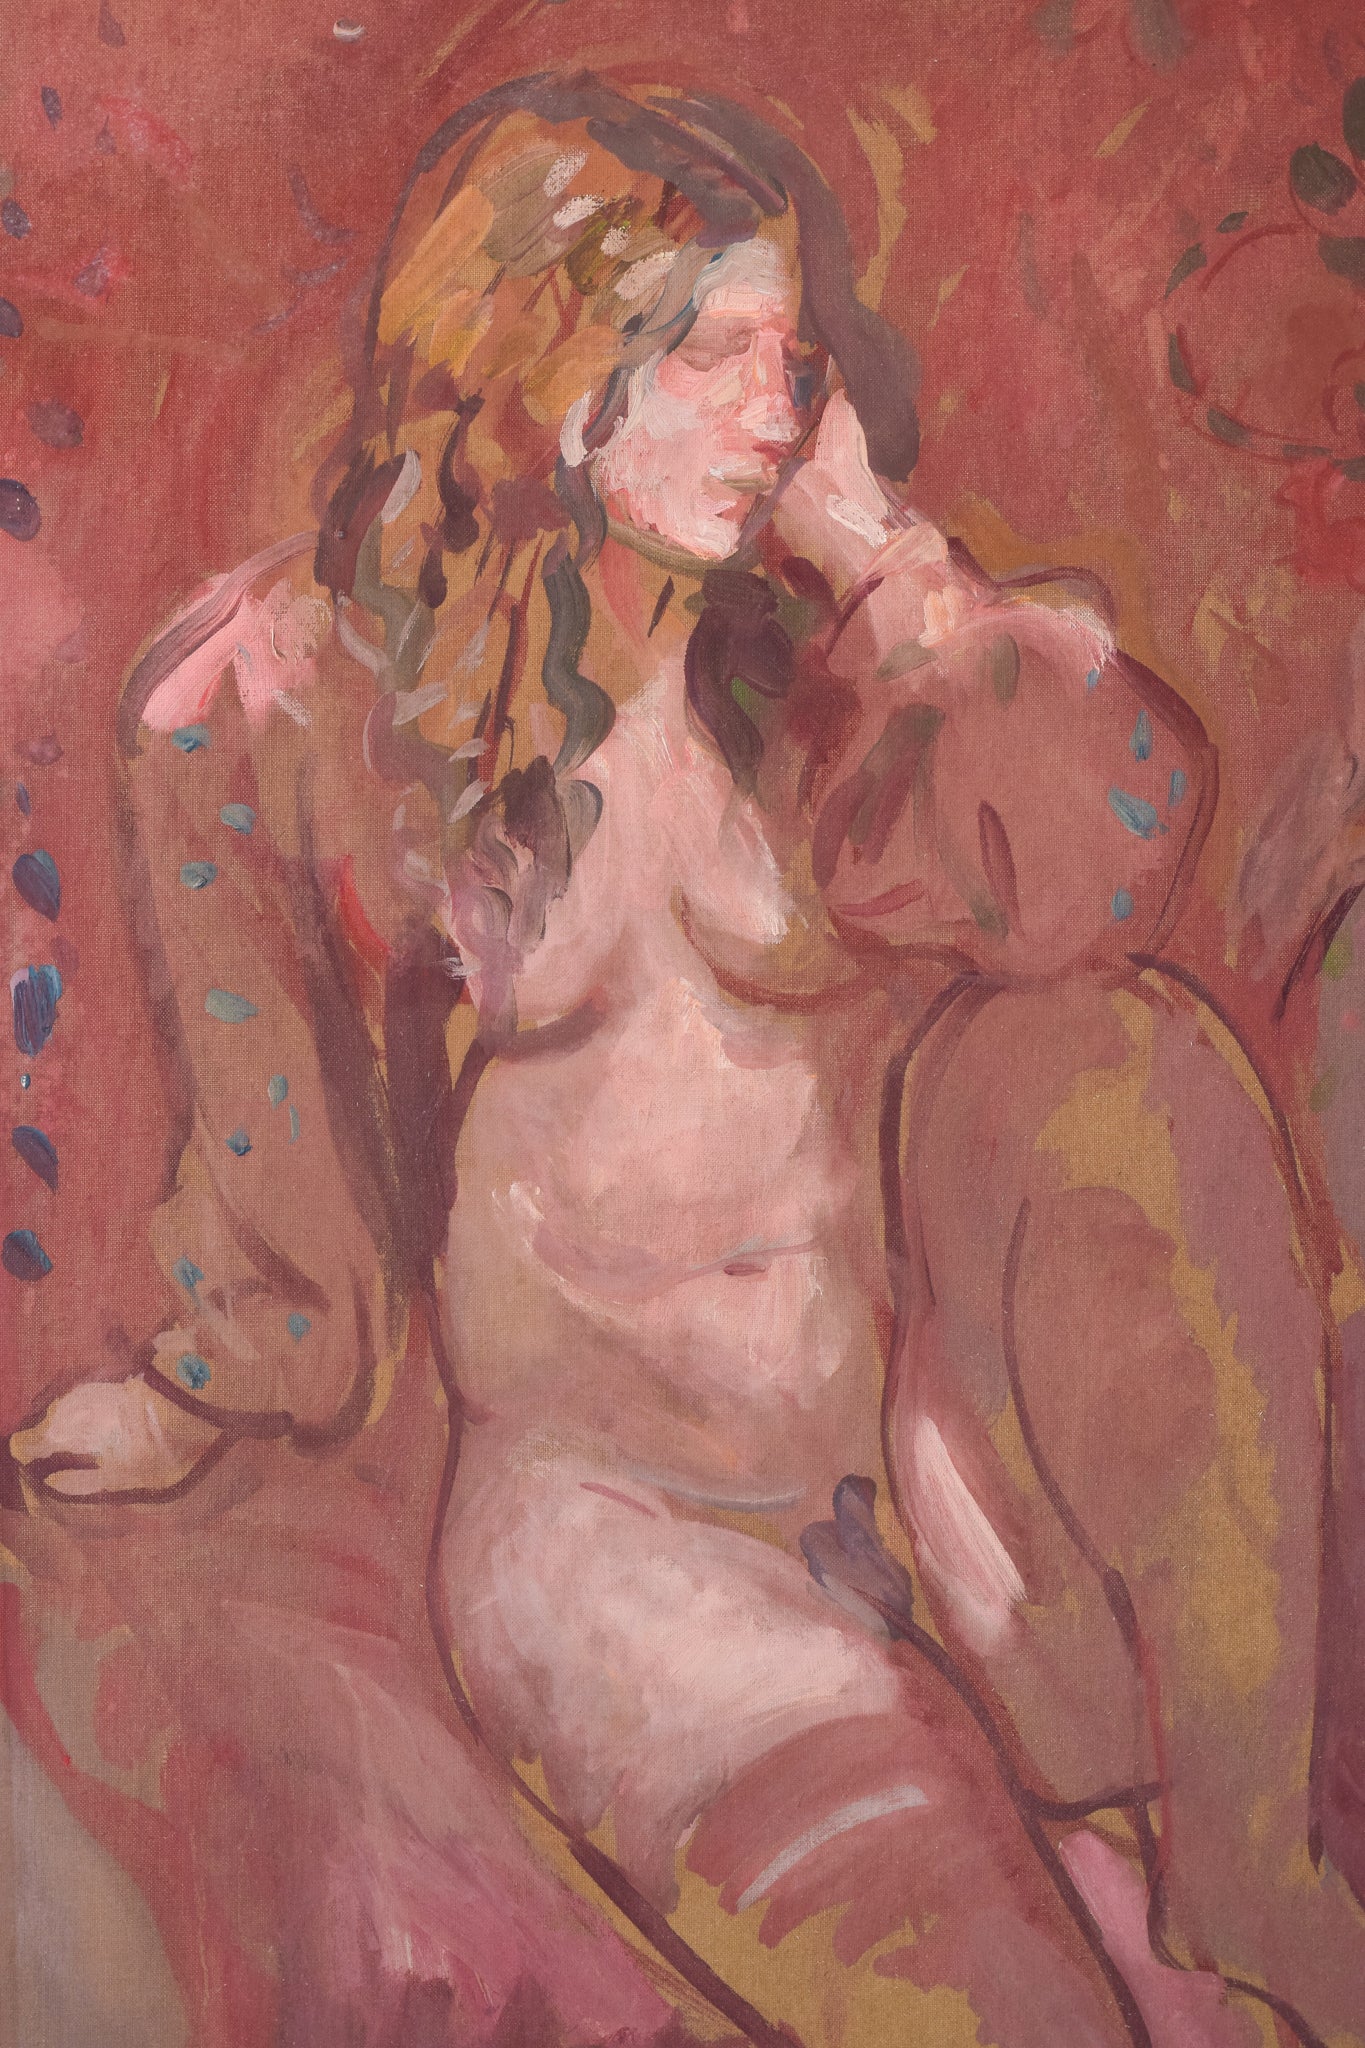 Antoni Munill - 'Mujeres' - Two Evocative Female Figures